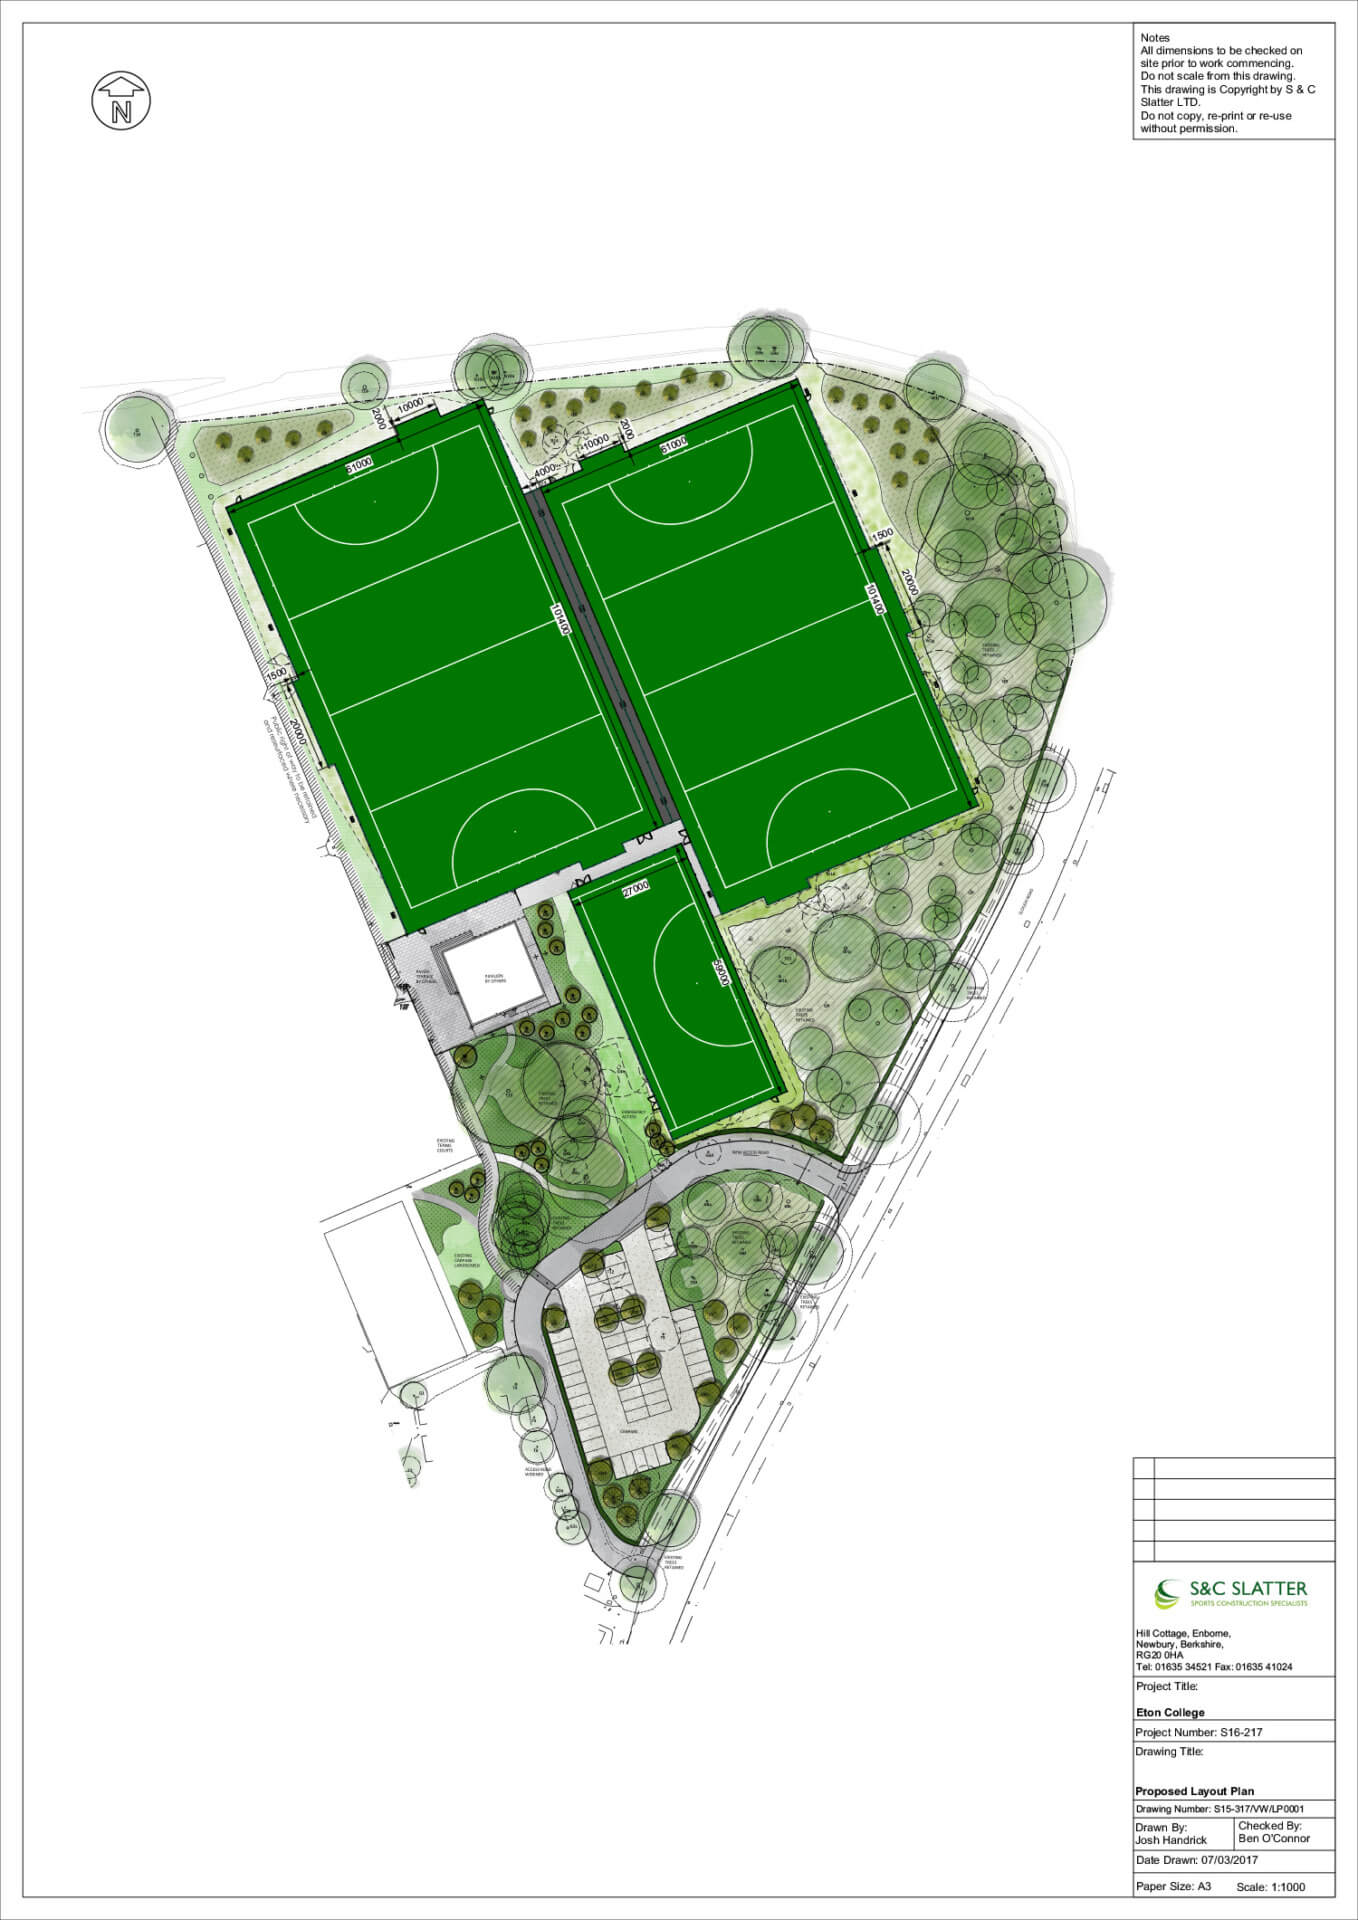 Eton College sports pitch conceptual design